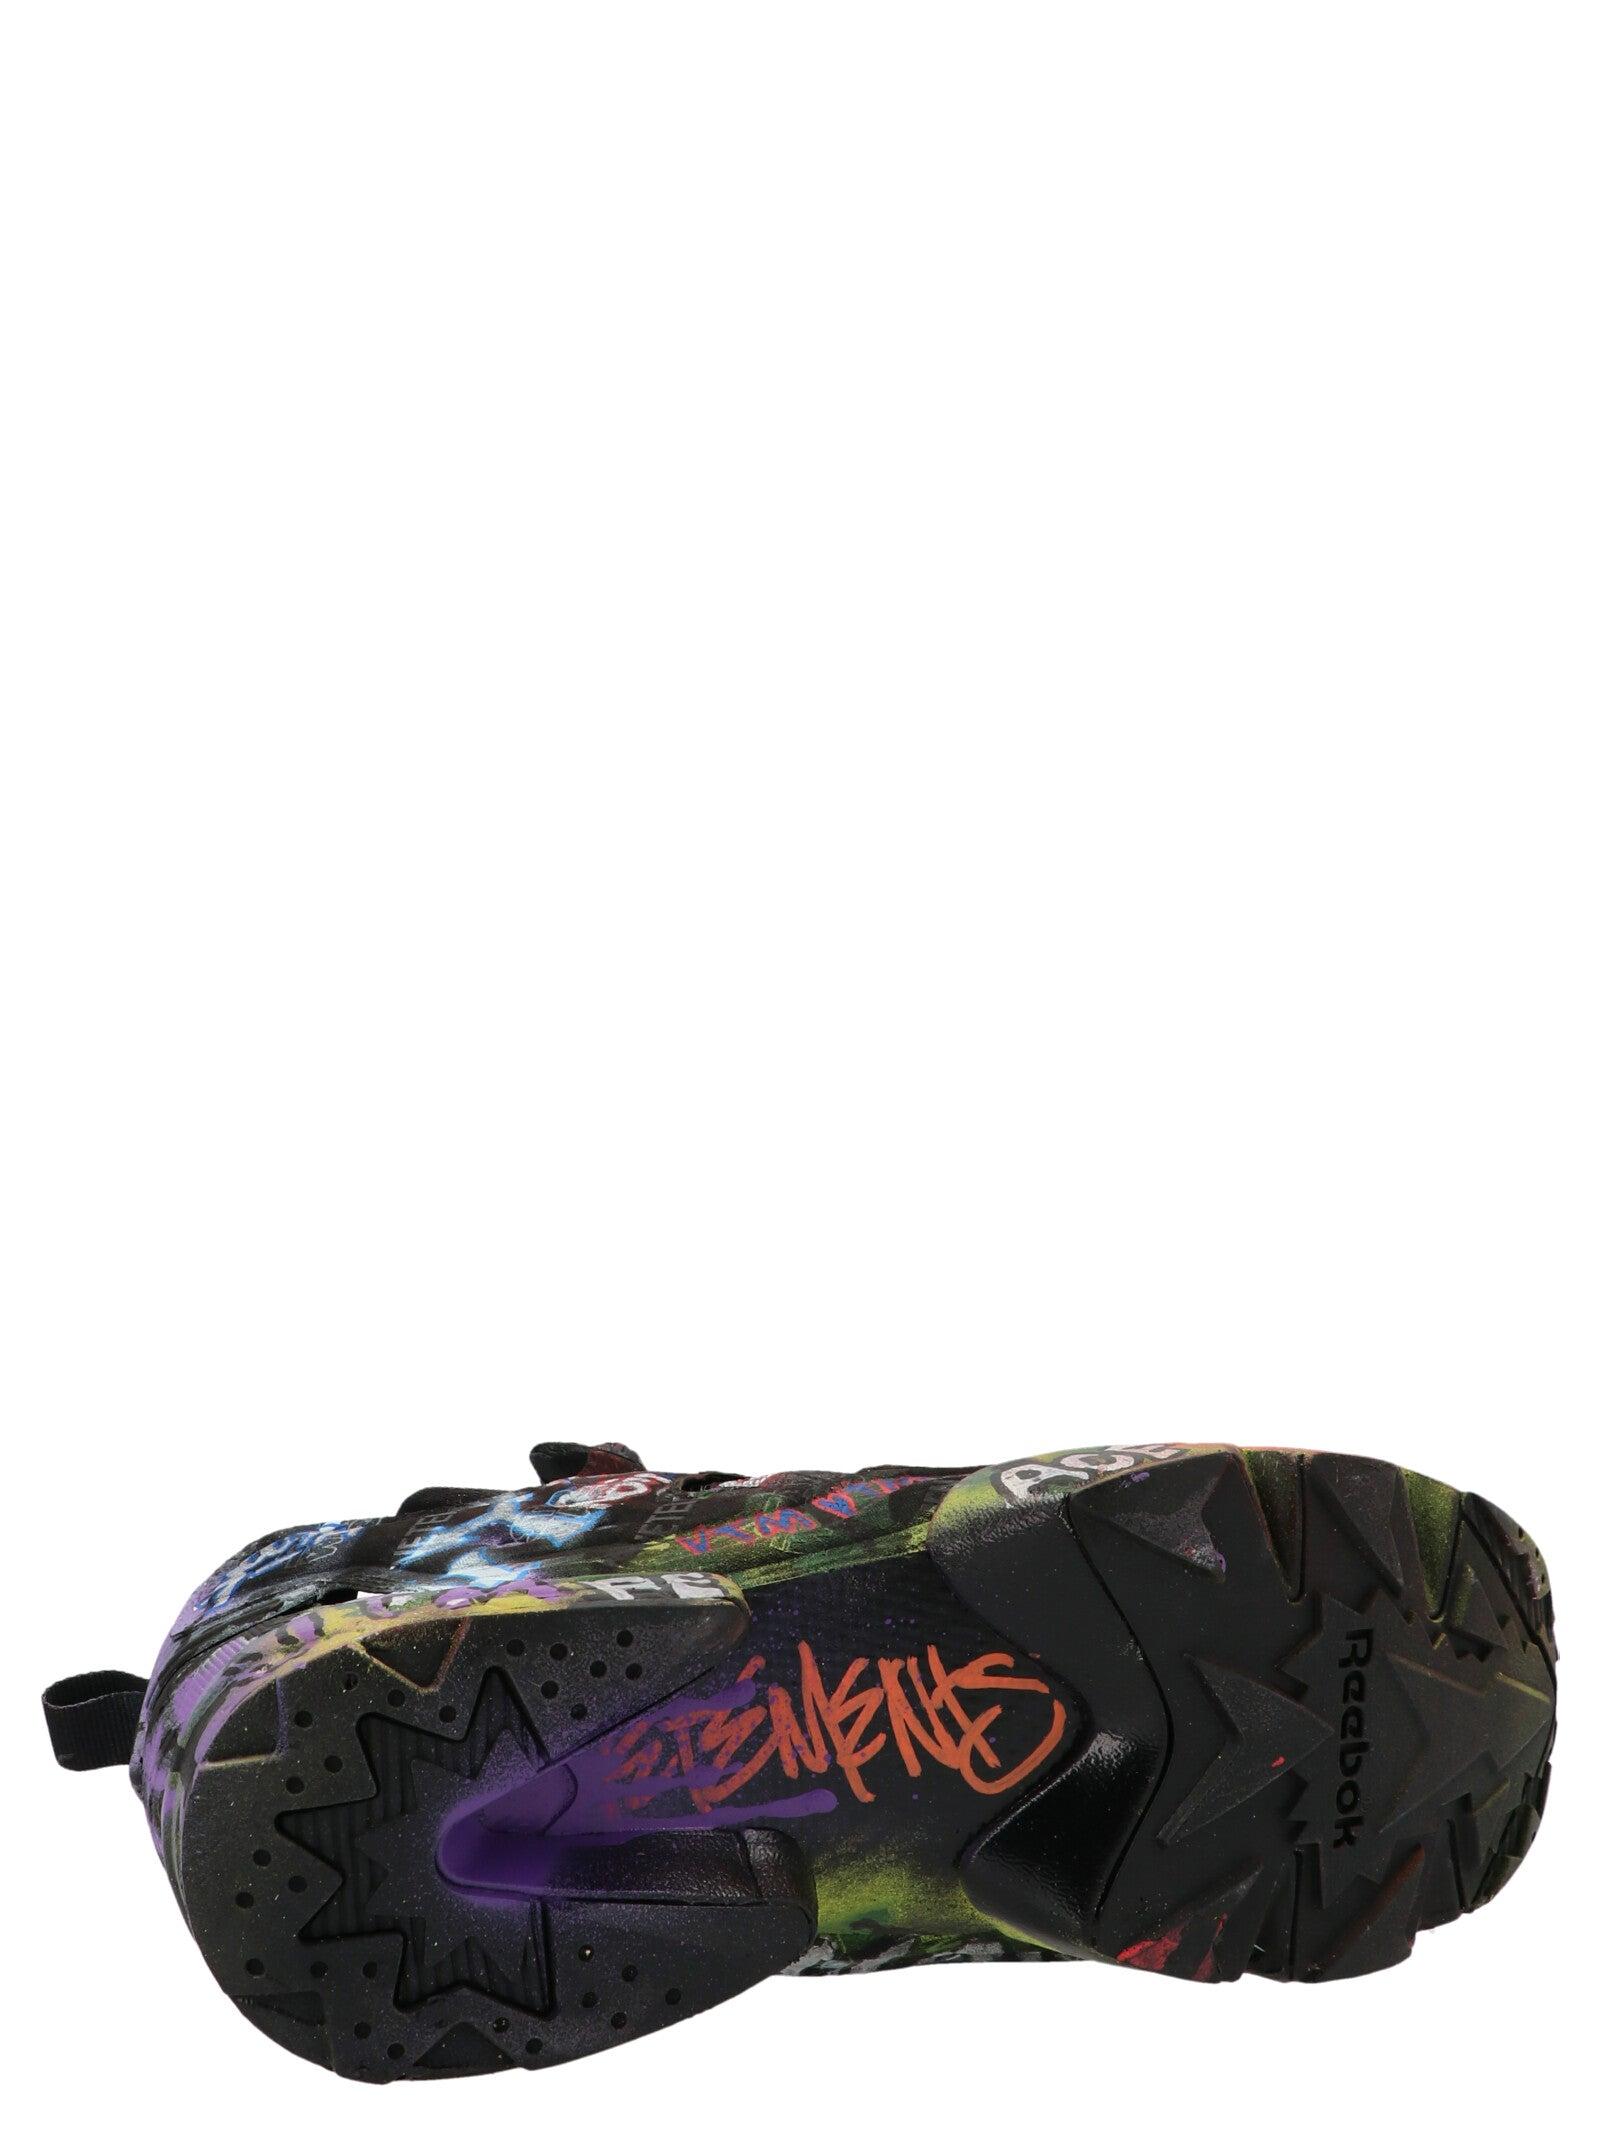 Vetements Graffiti Hand Painted Instapump Fury X Reebok Sneakers | Lyst